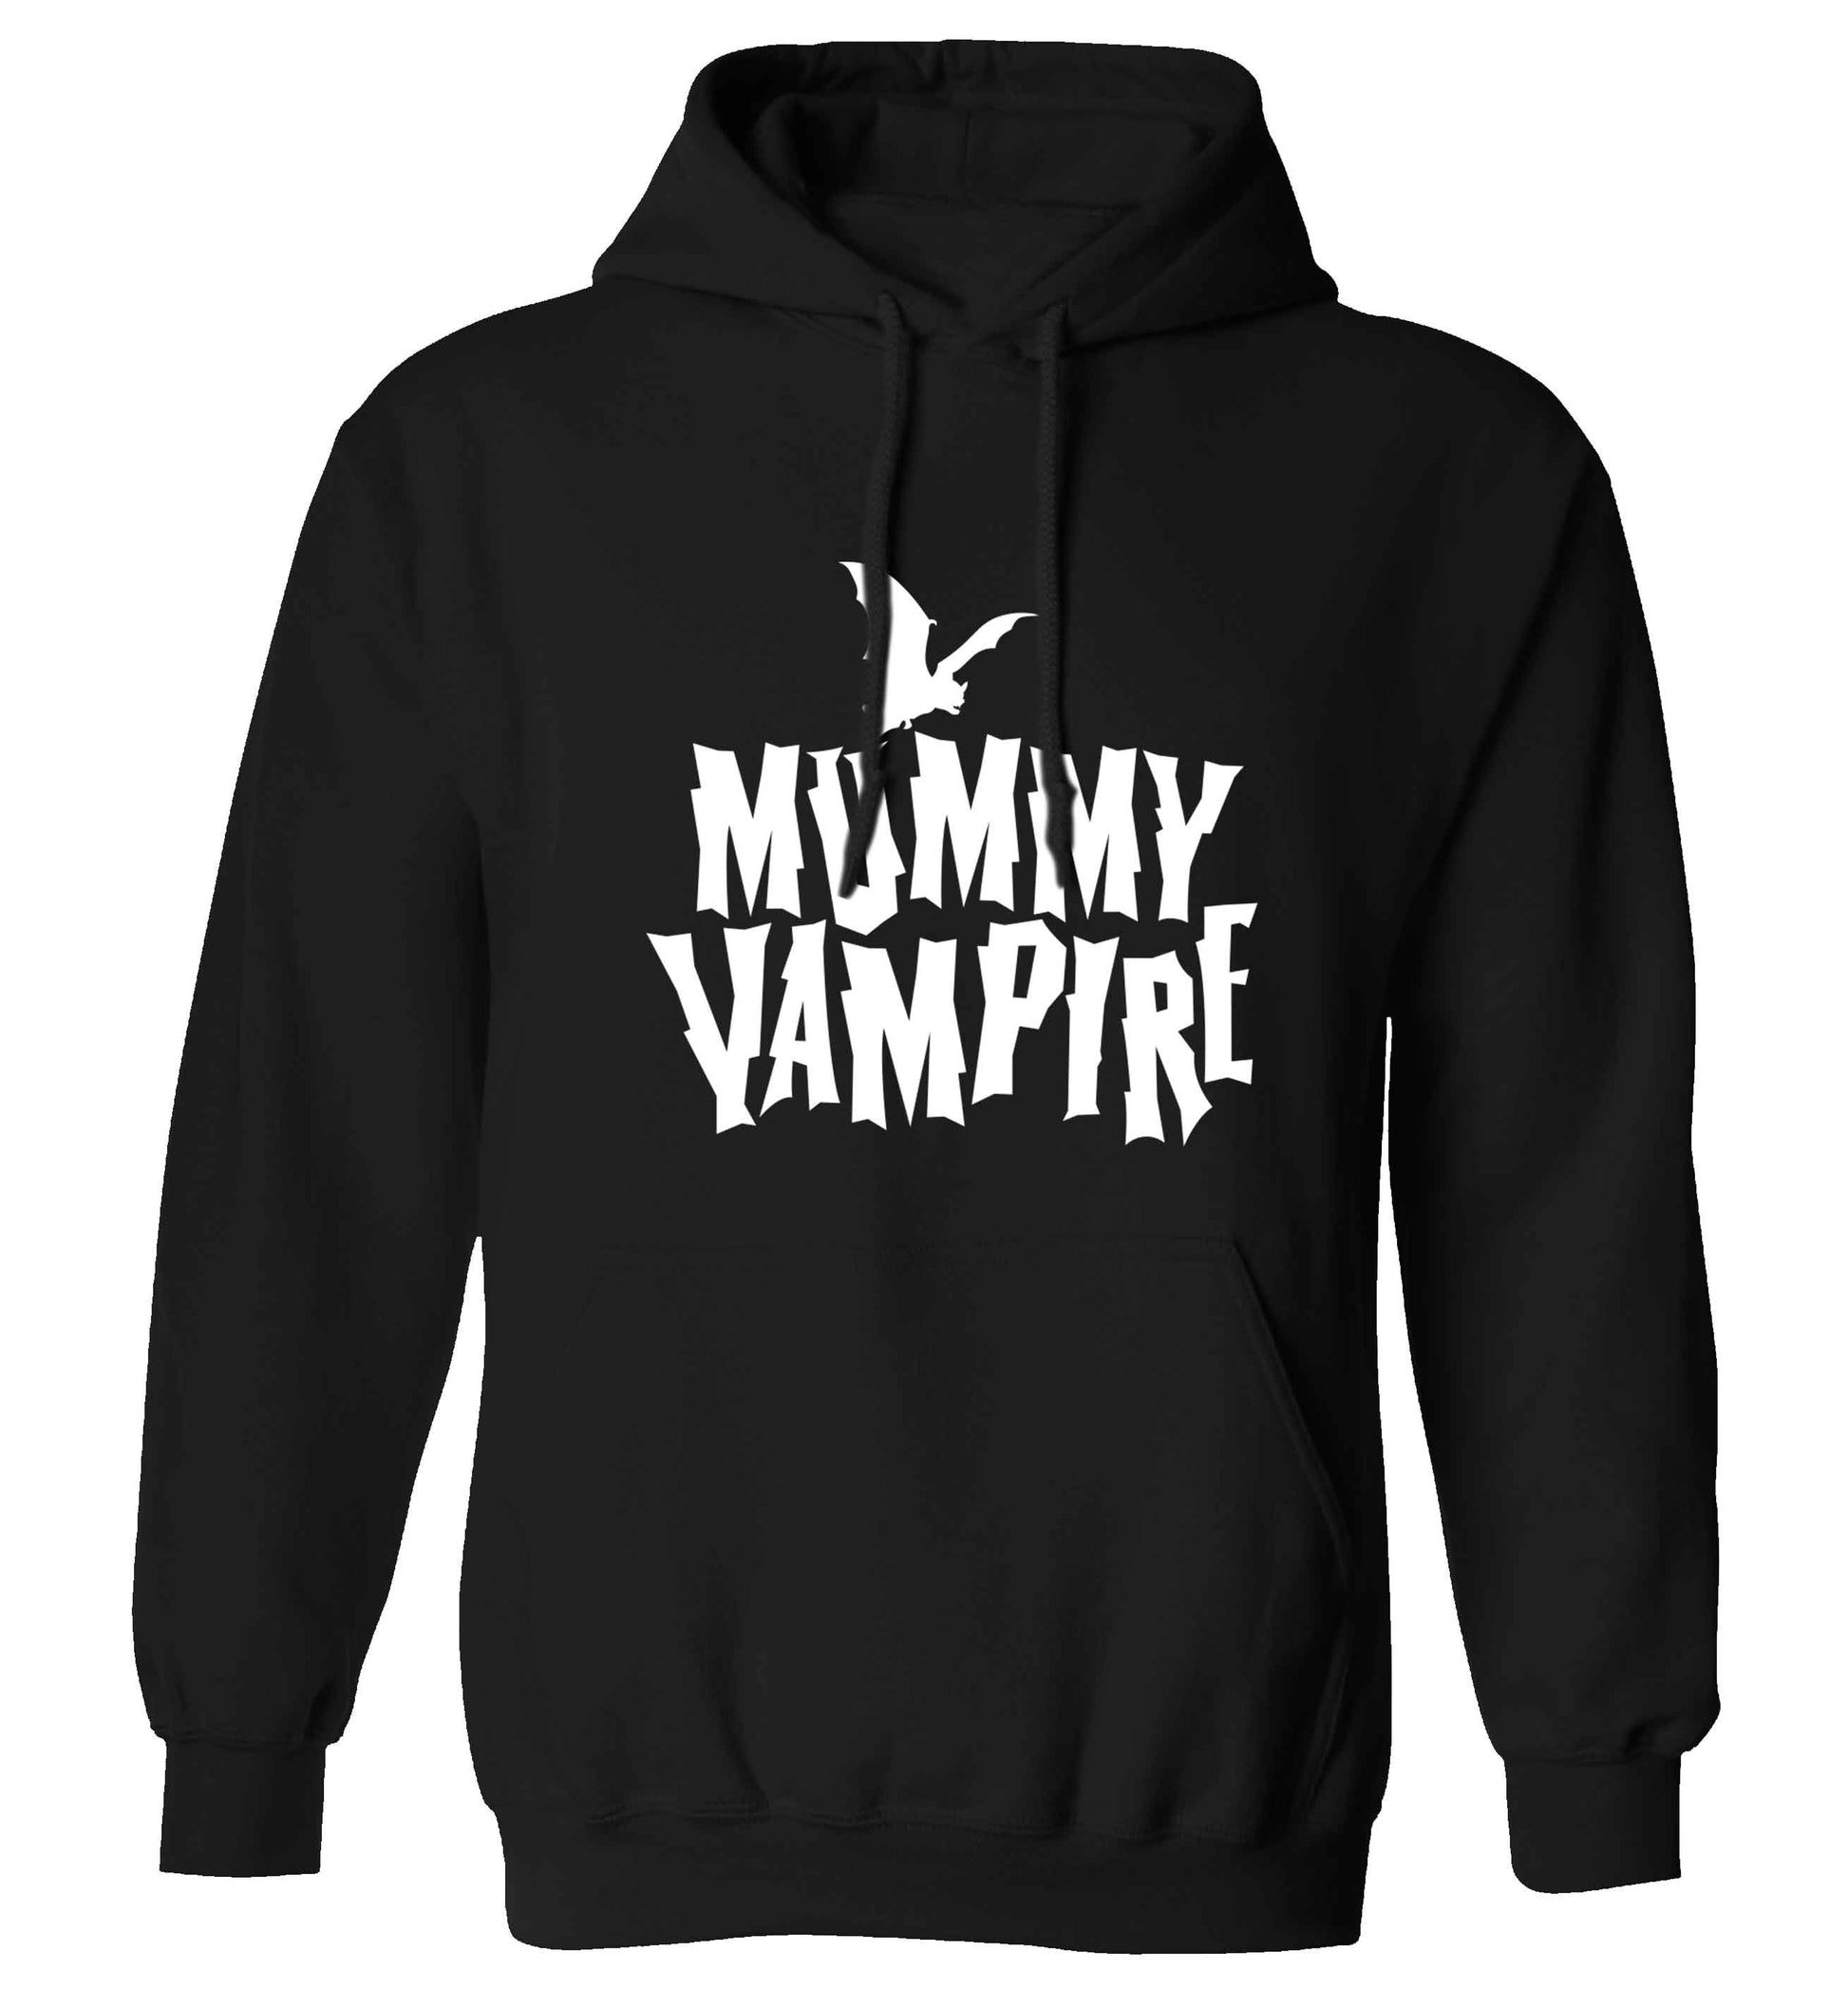 Mummy vampire adults unisex black hoodie 2XL